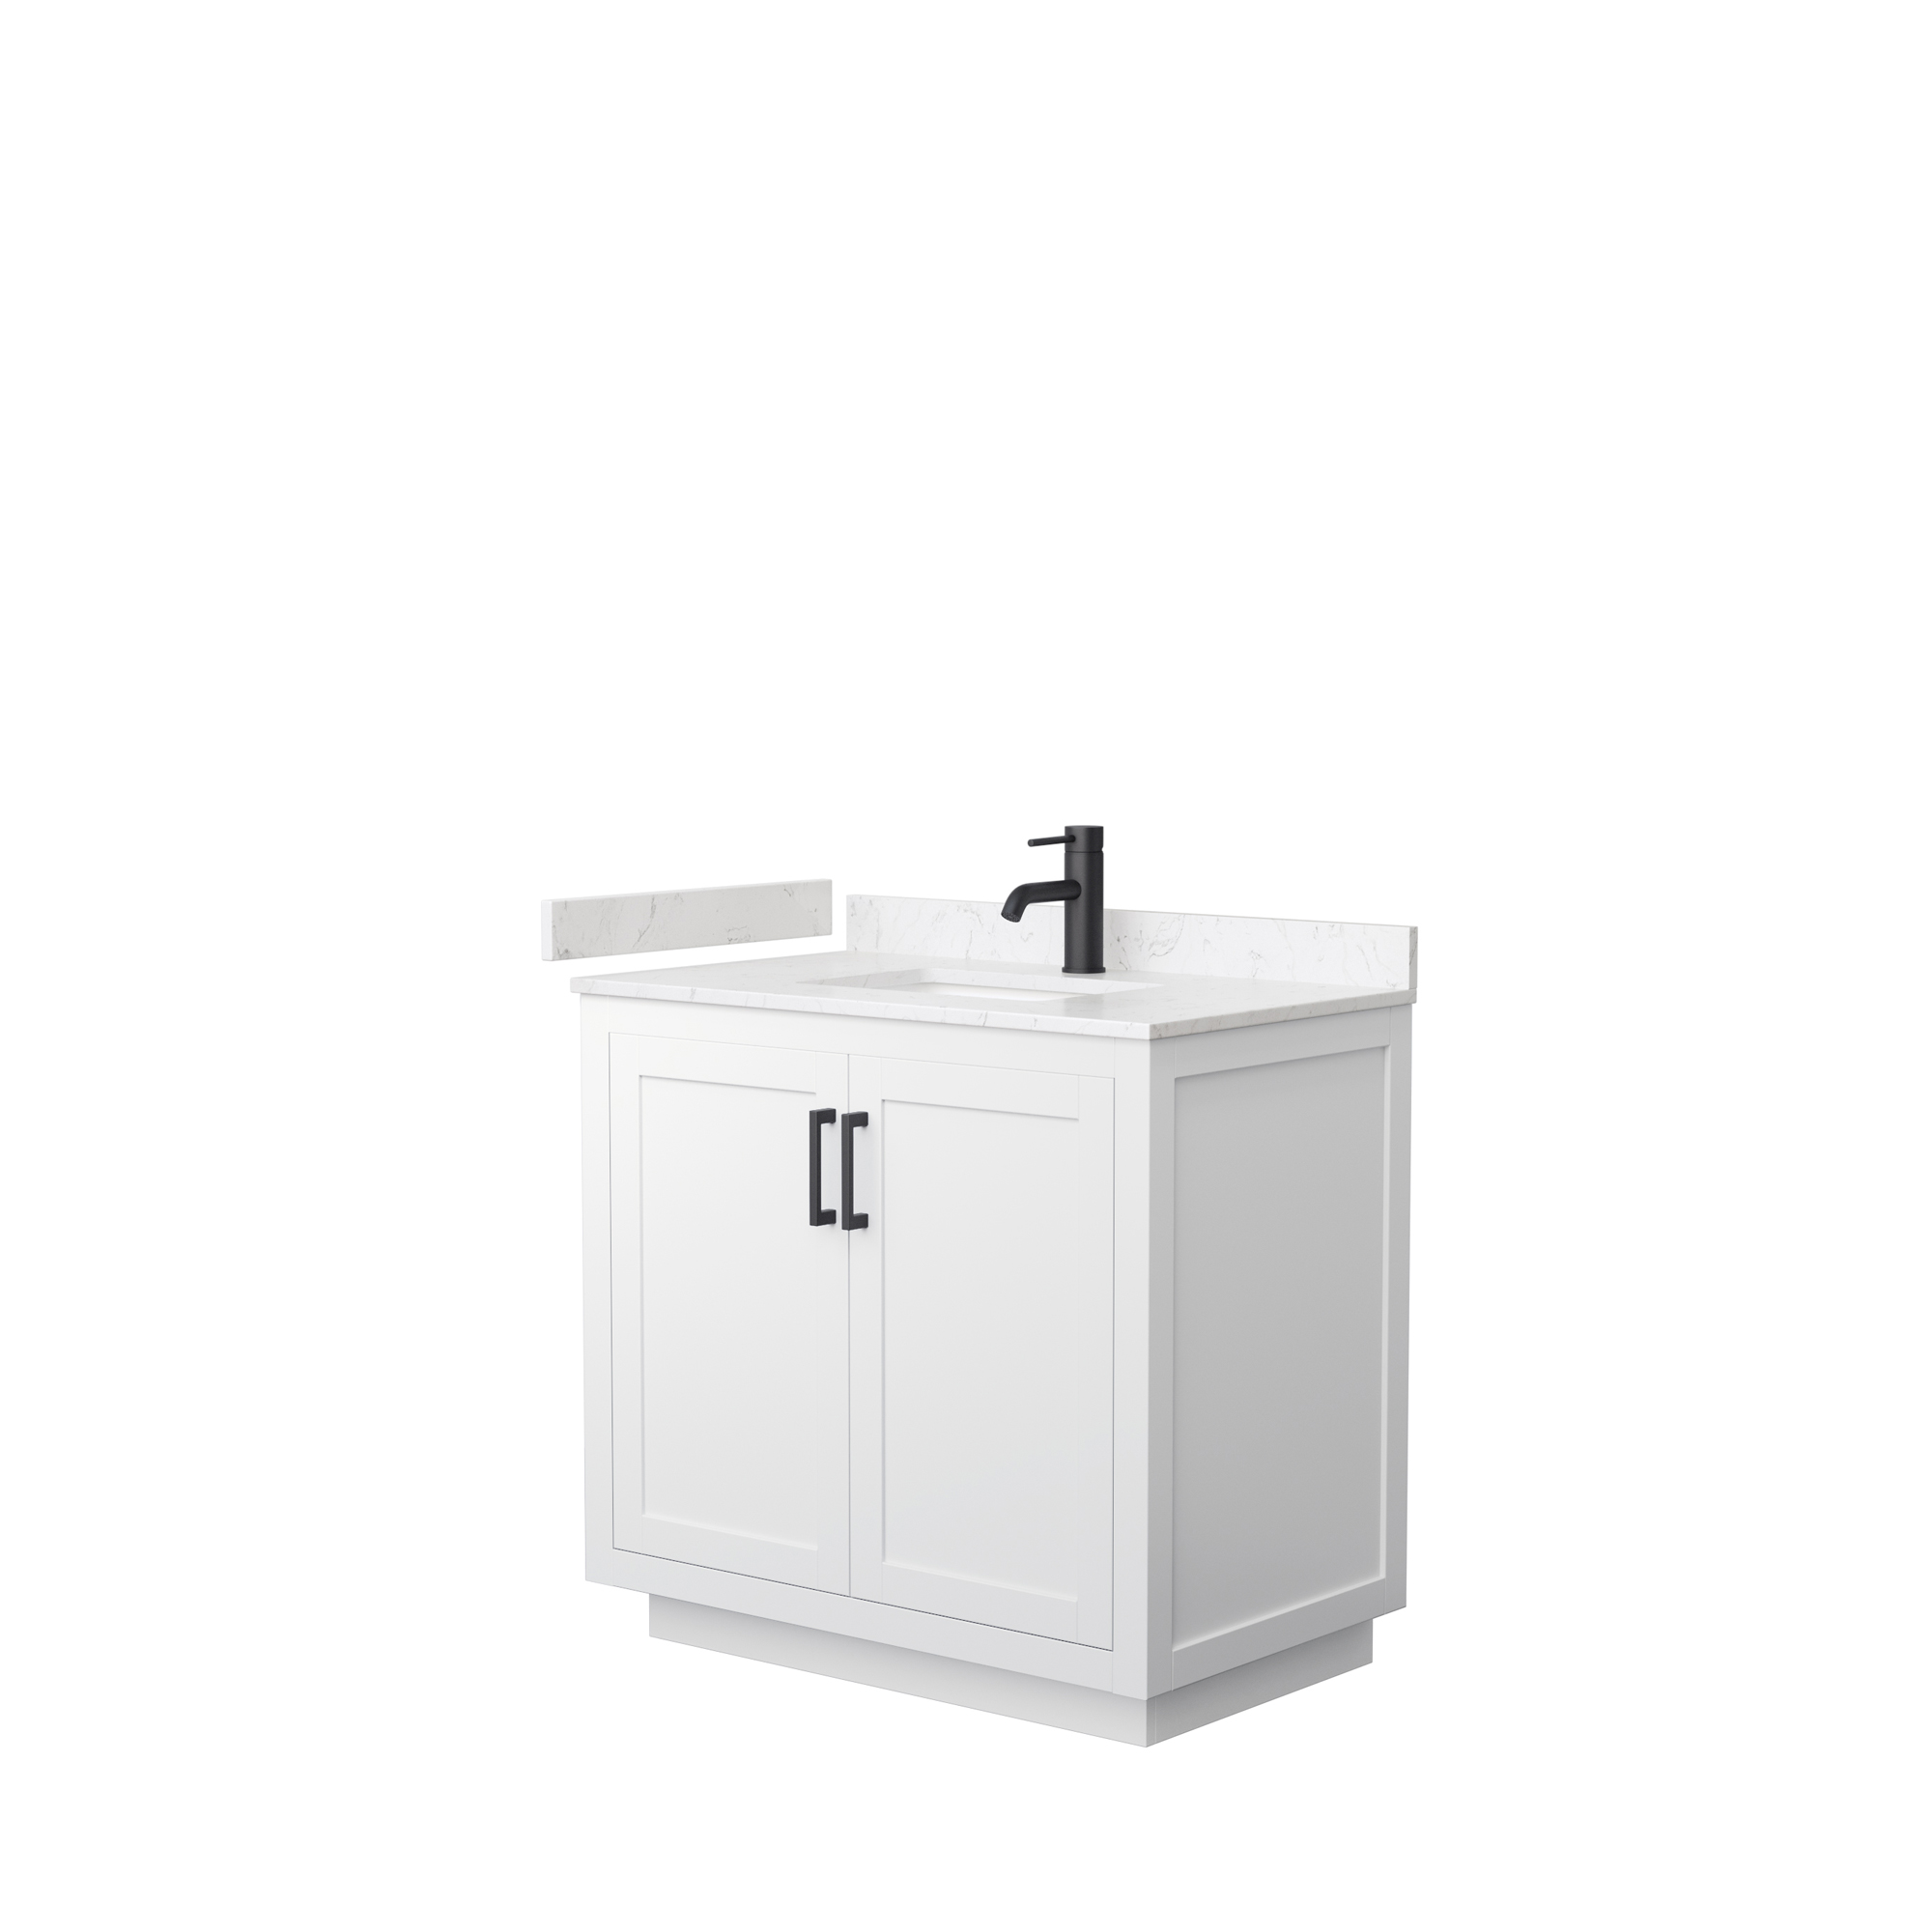 36" Single Bathroom Vanity in White, Light-Vein Carrara Cultured Marble Countertop, Undermount Square Sink, Matte Black Trim